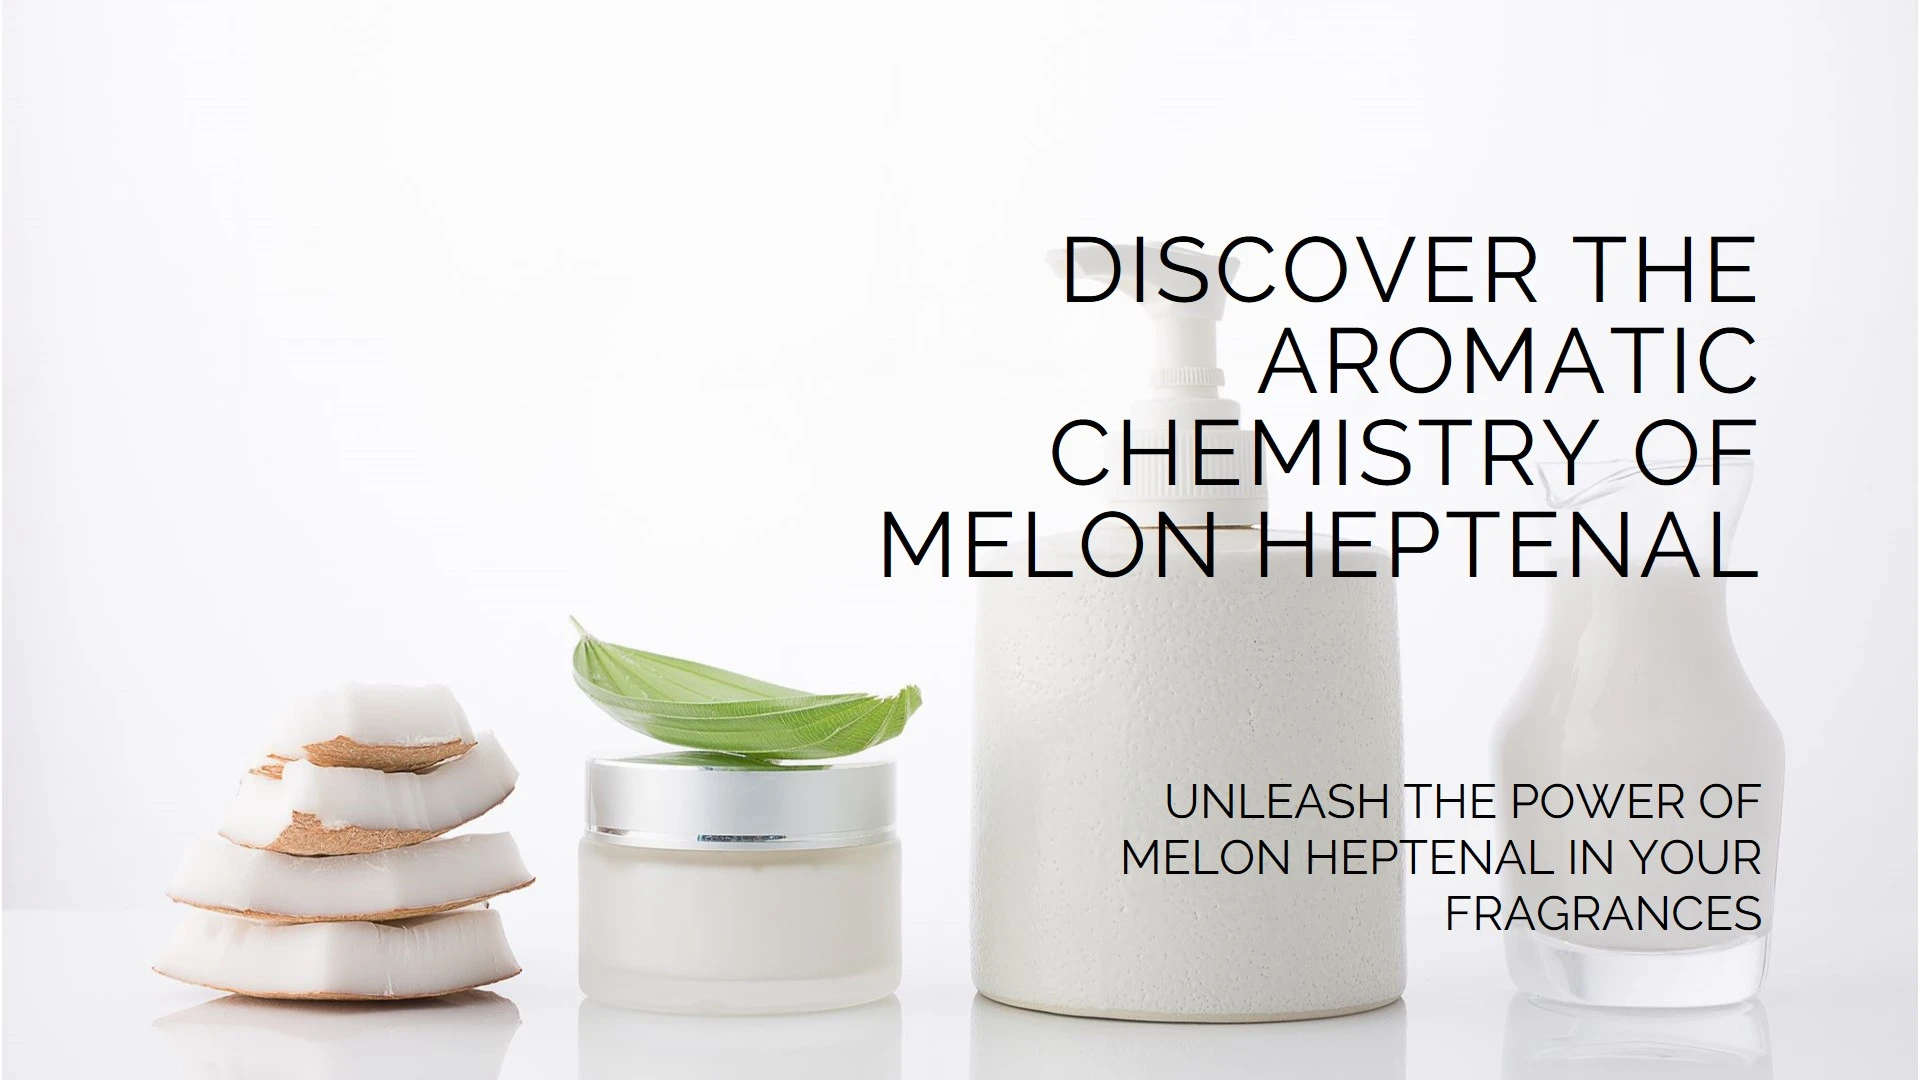 Aromatic Chemistry Melon Heptenal